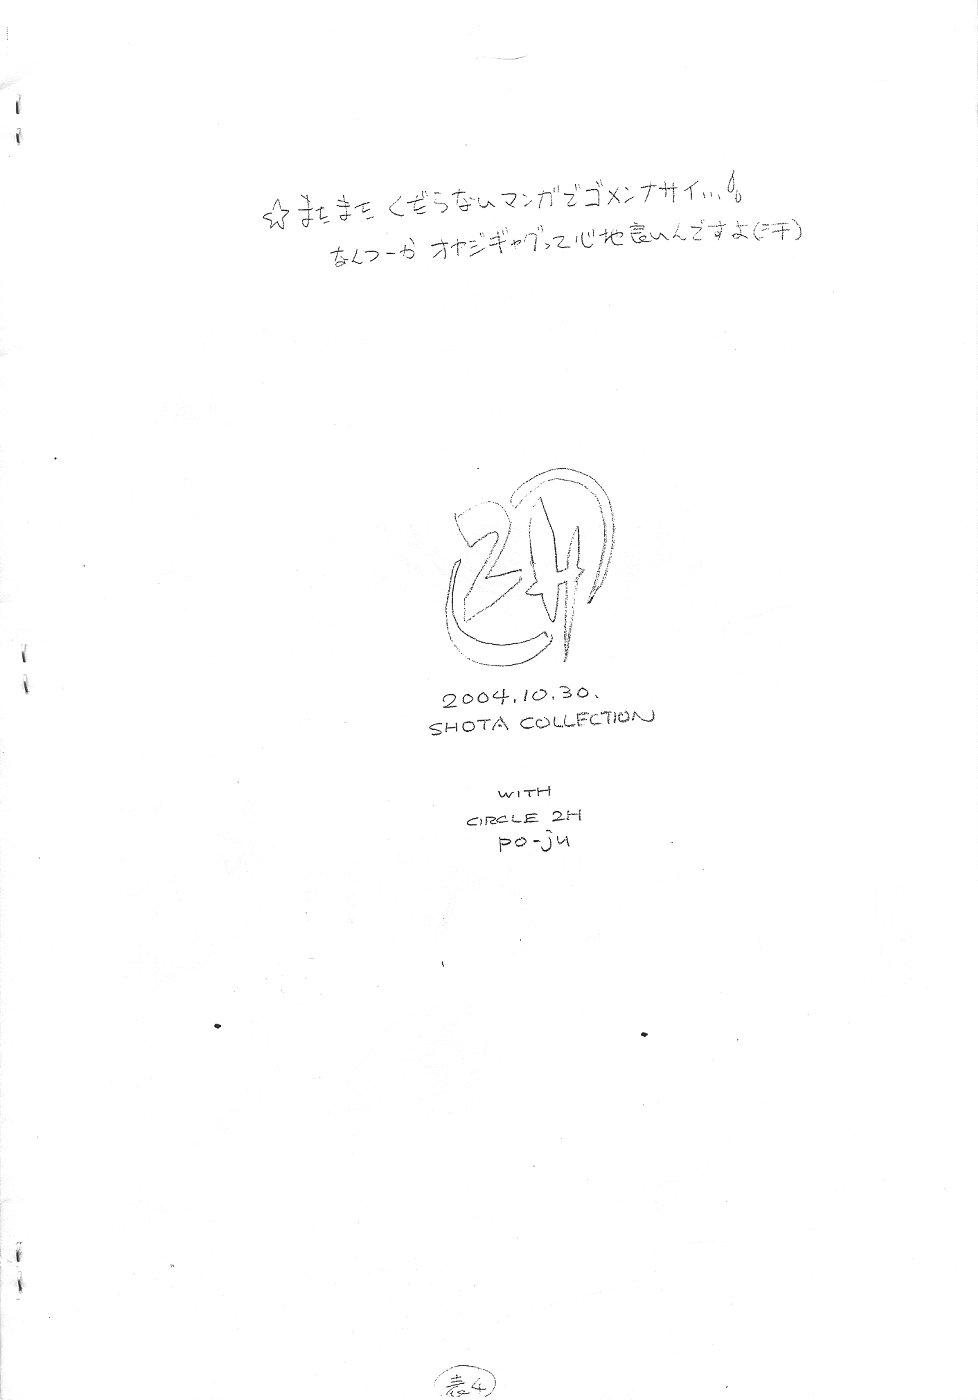 Shotakore 4 Copy Hon 8